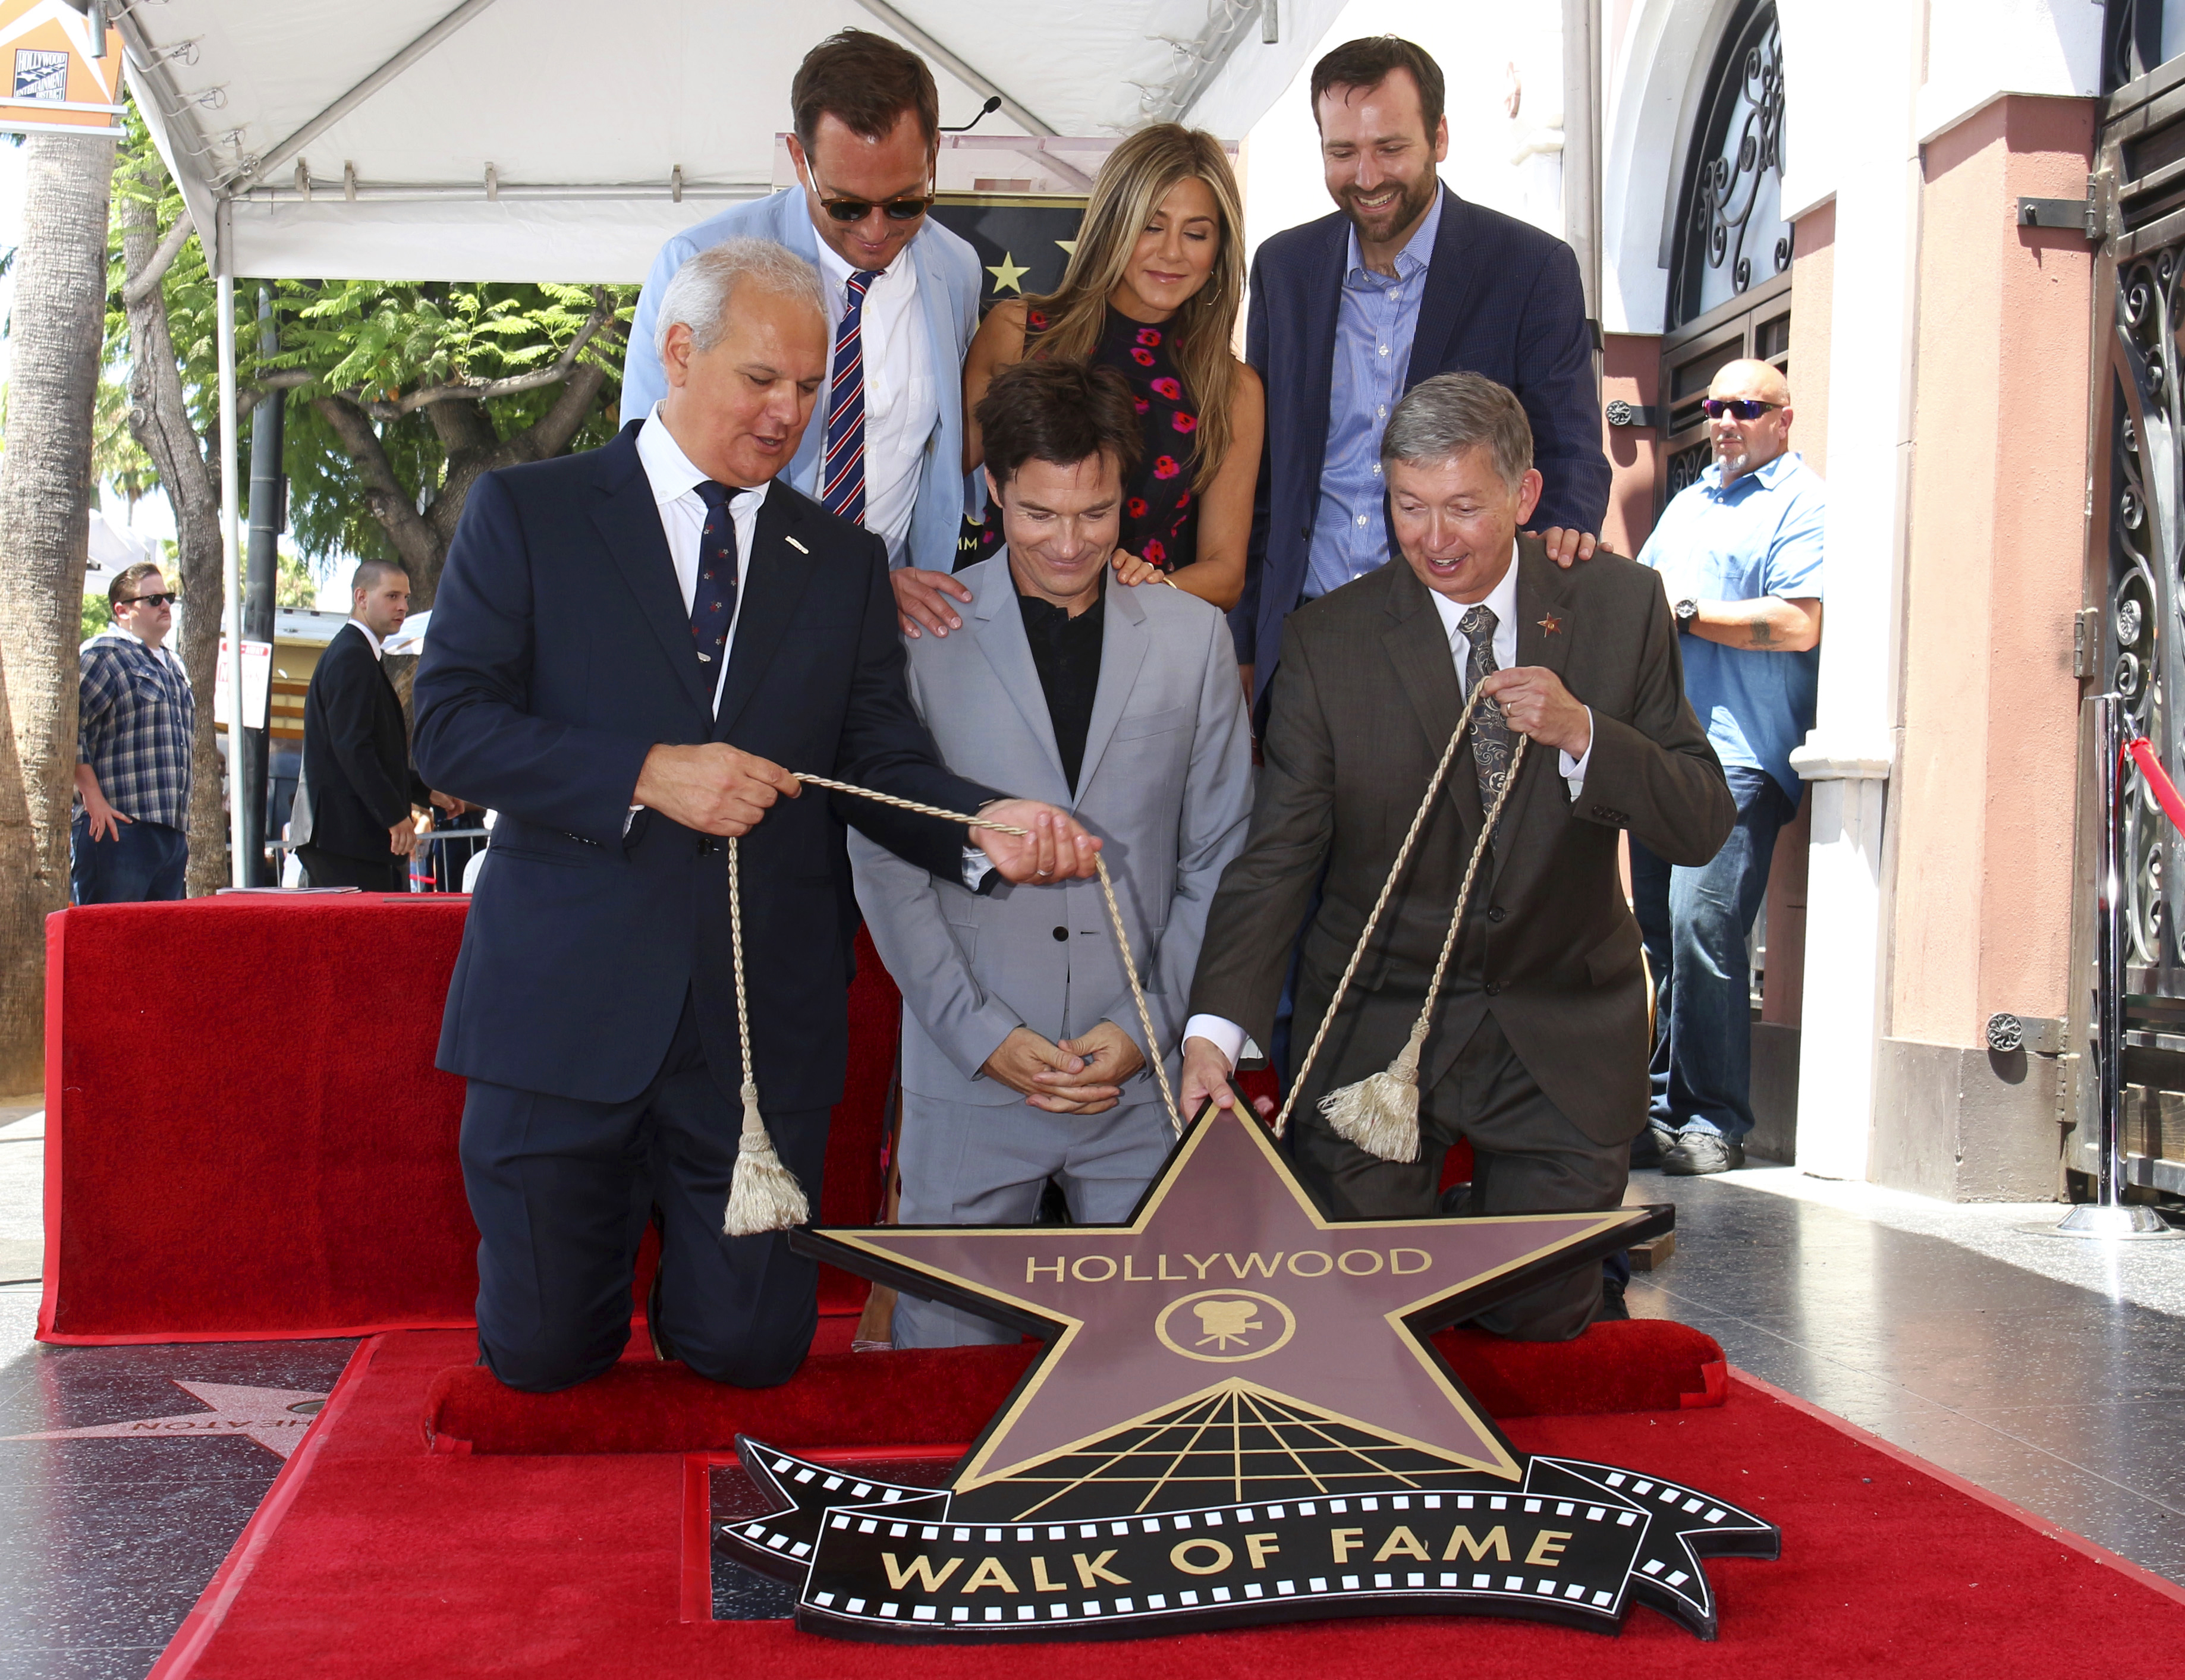 Jason Bateman's star unveiled